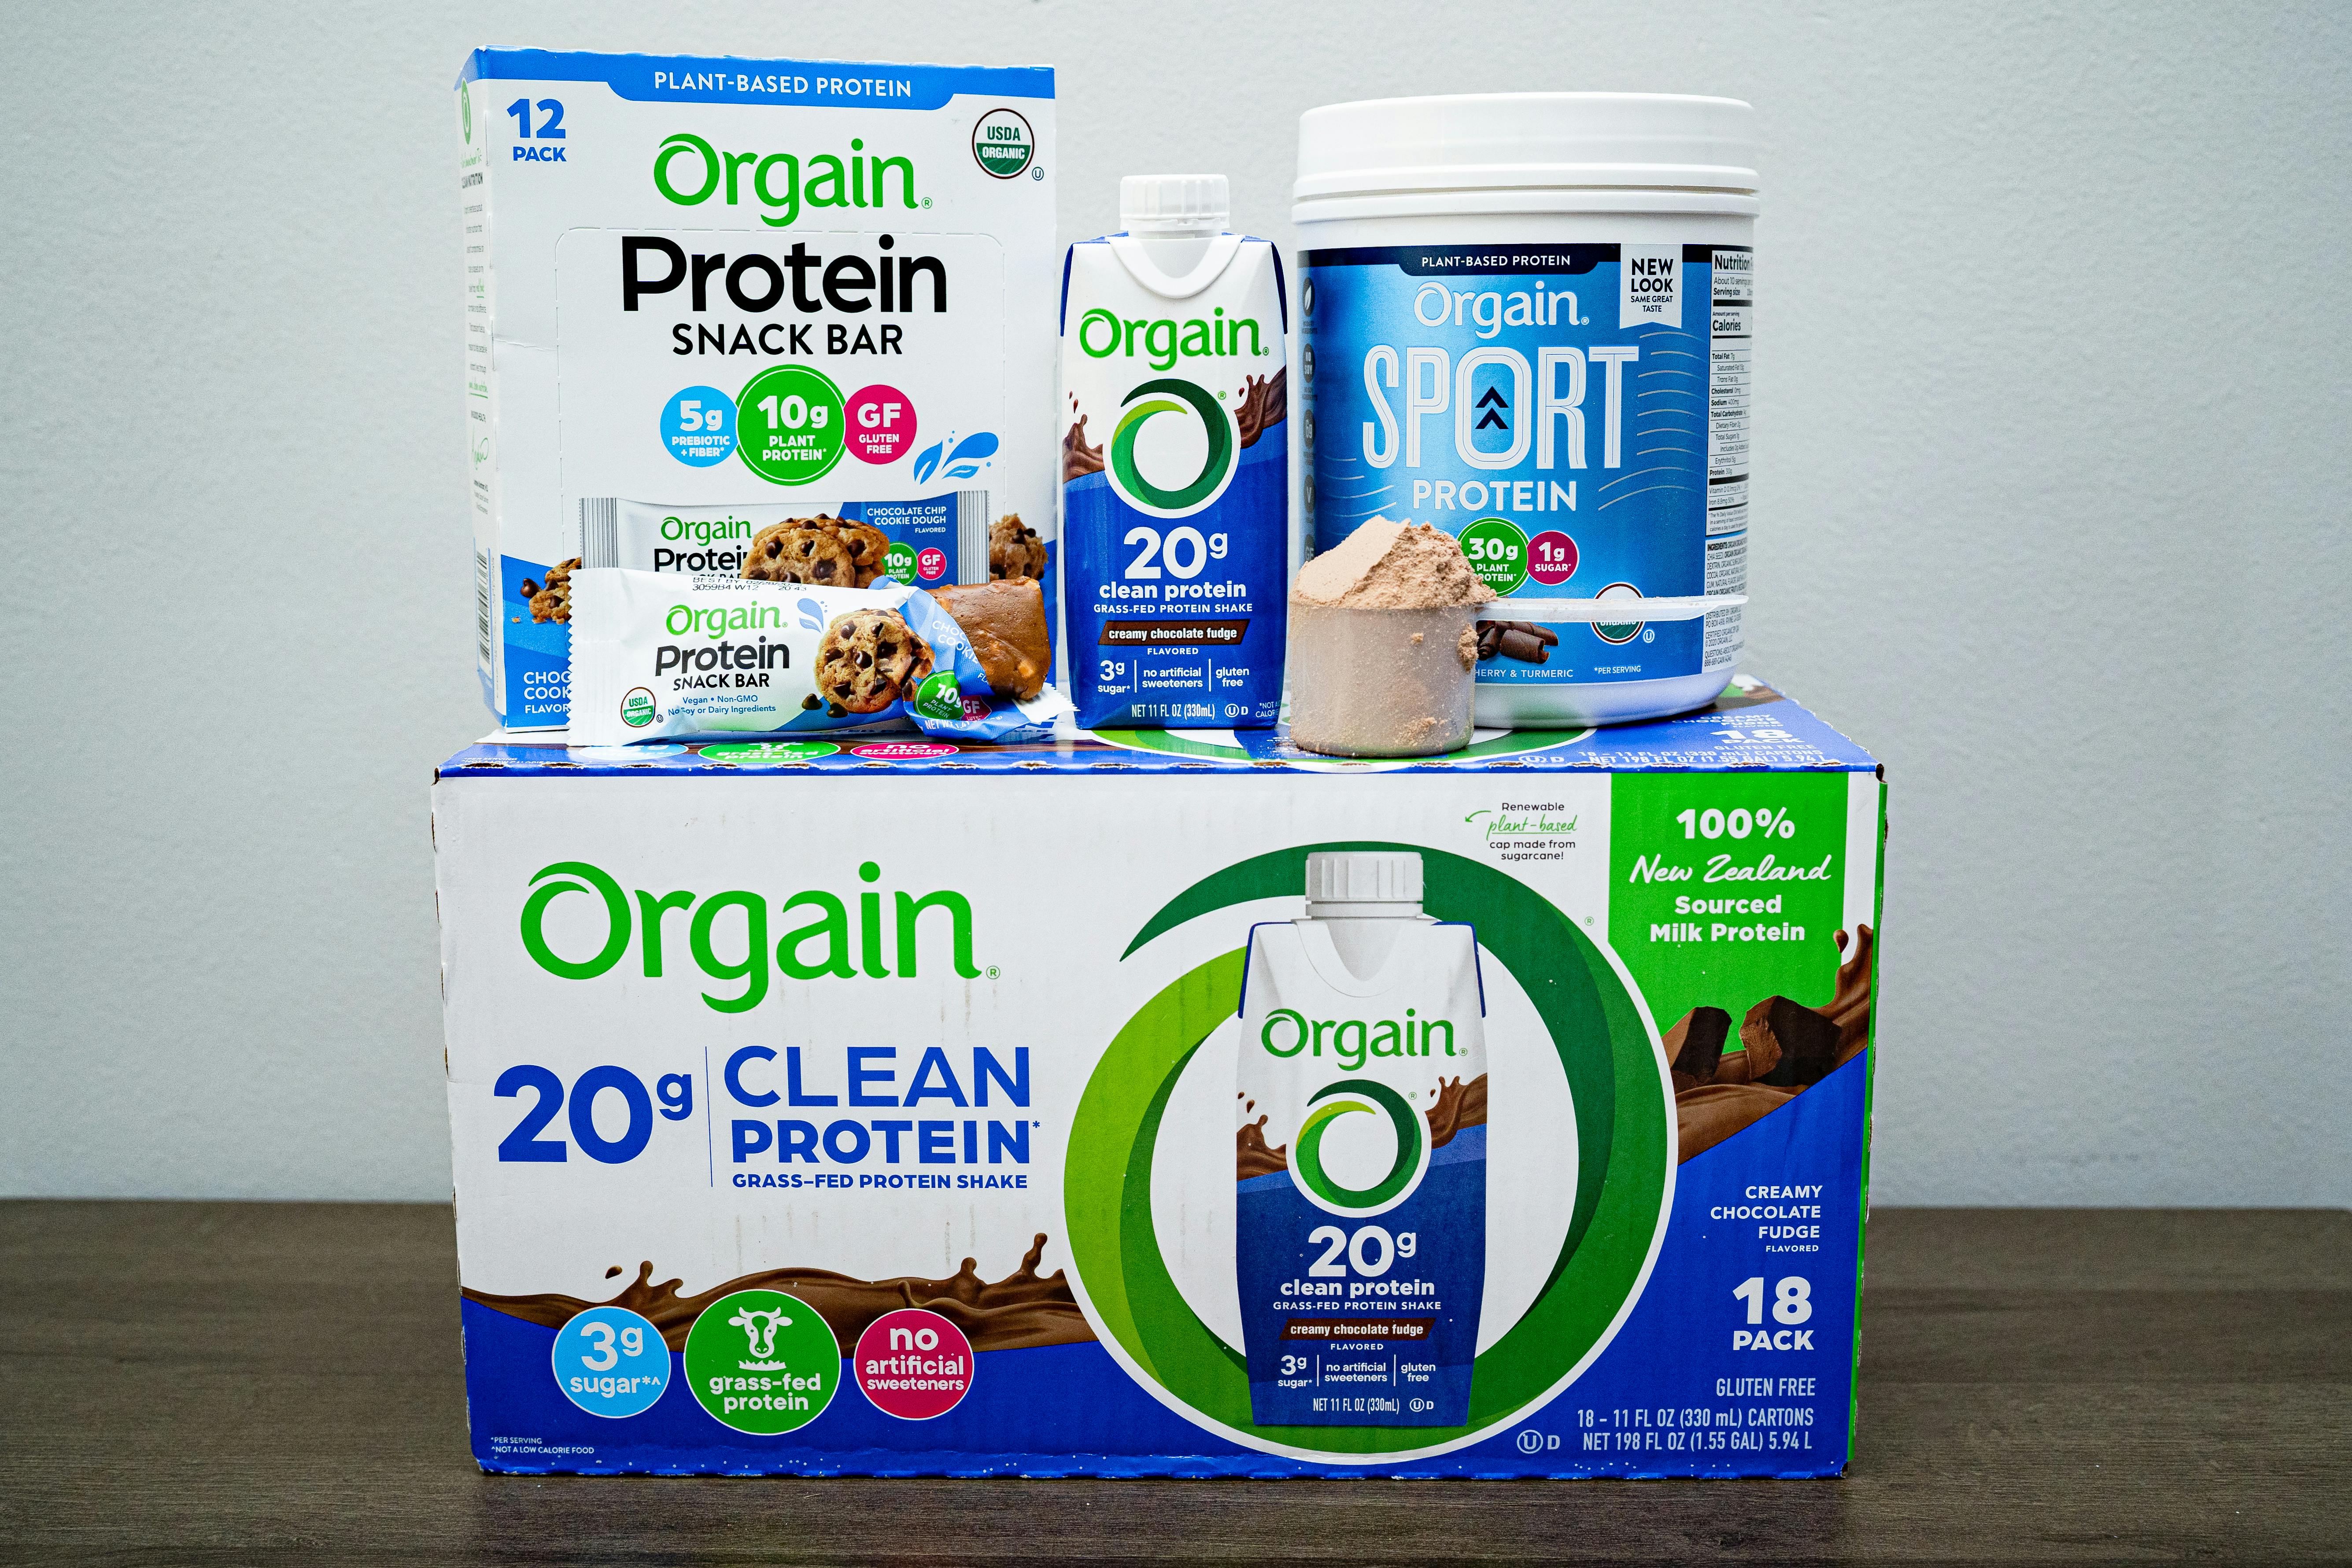 Orgain Grass-Fed Protein Shake, Creamy Chocolate Fudge - 12 pack, 11 fl oz cartons